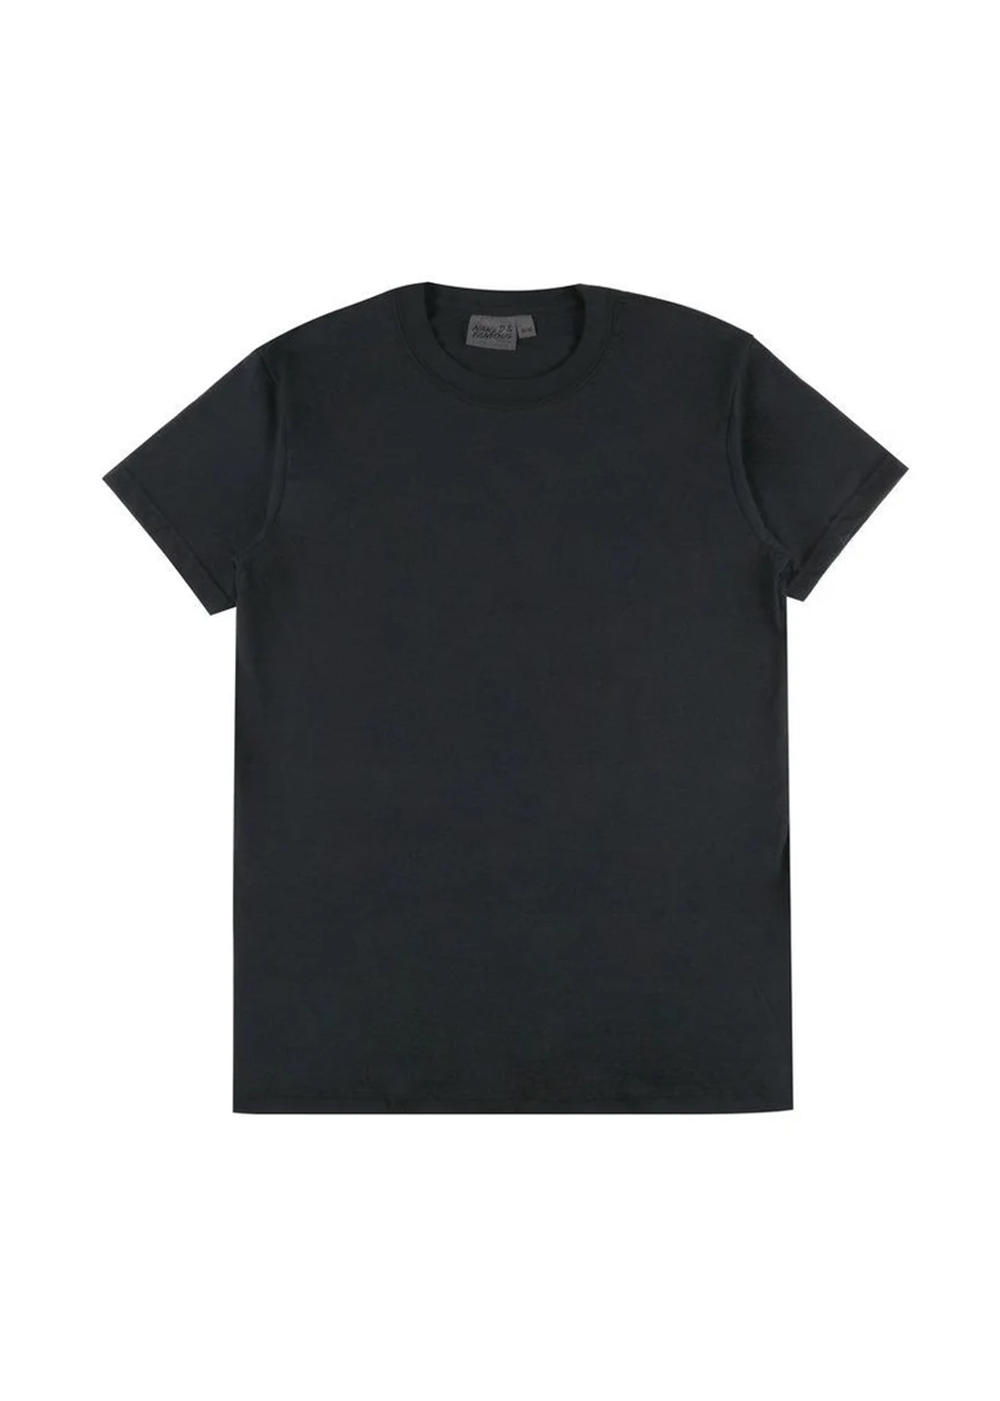 Circular Knit T-Shirt - Black - Naked and Famous Denim Canada - Danali